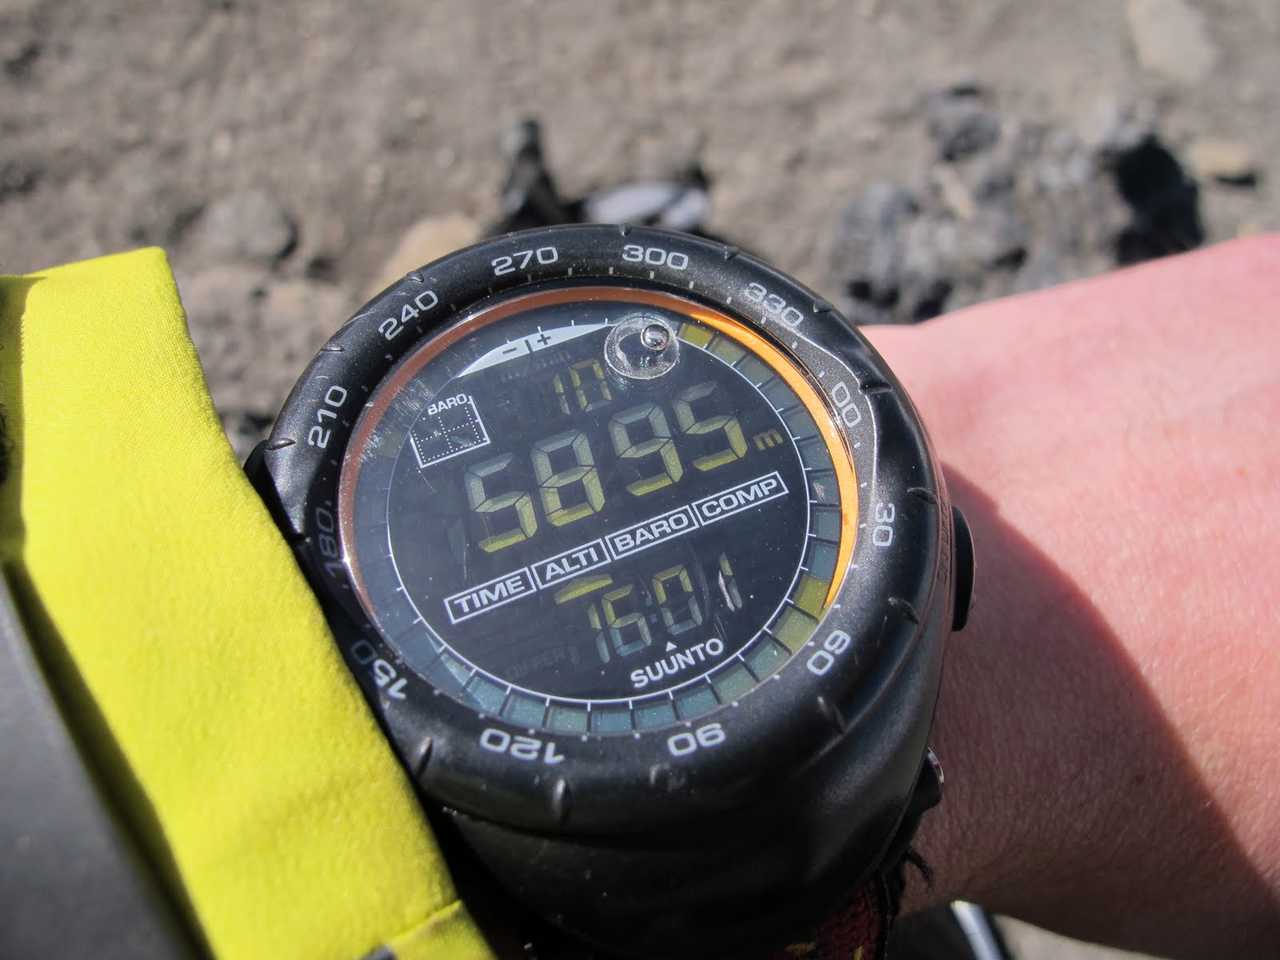 Altitude indiquée sur une montre au Uhuru peak